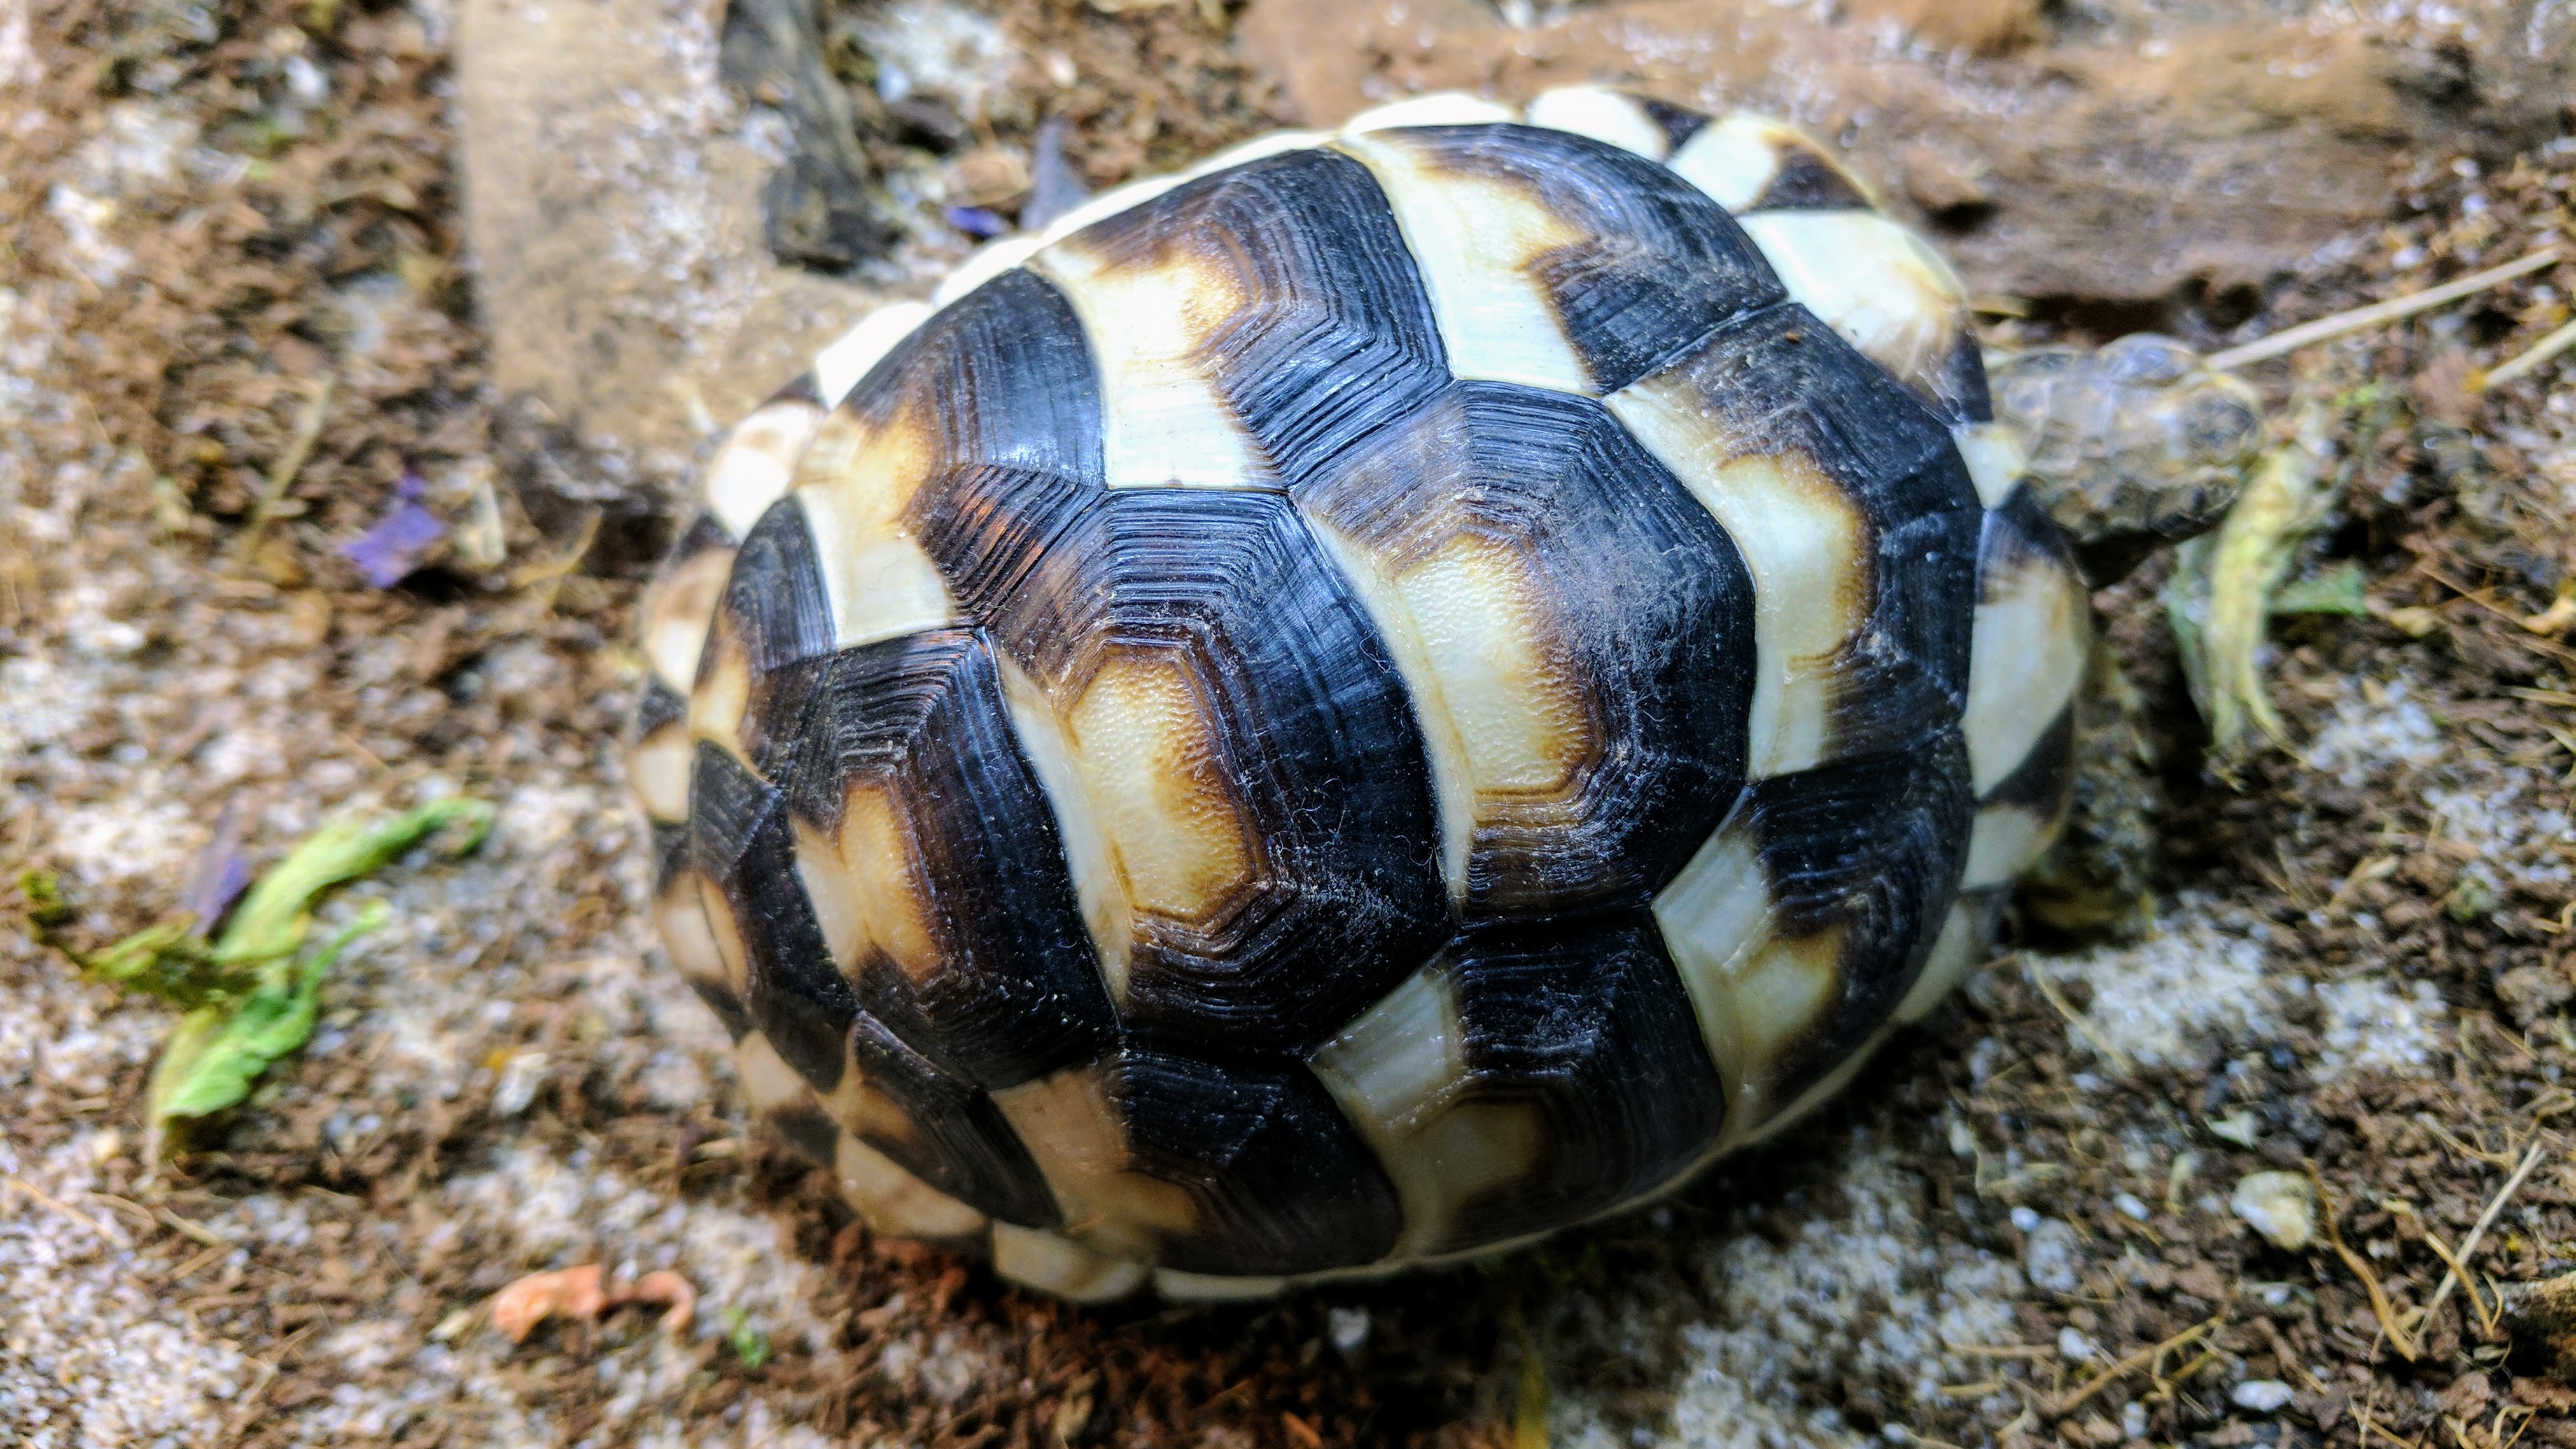 A baby tortoise